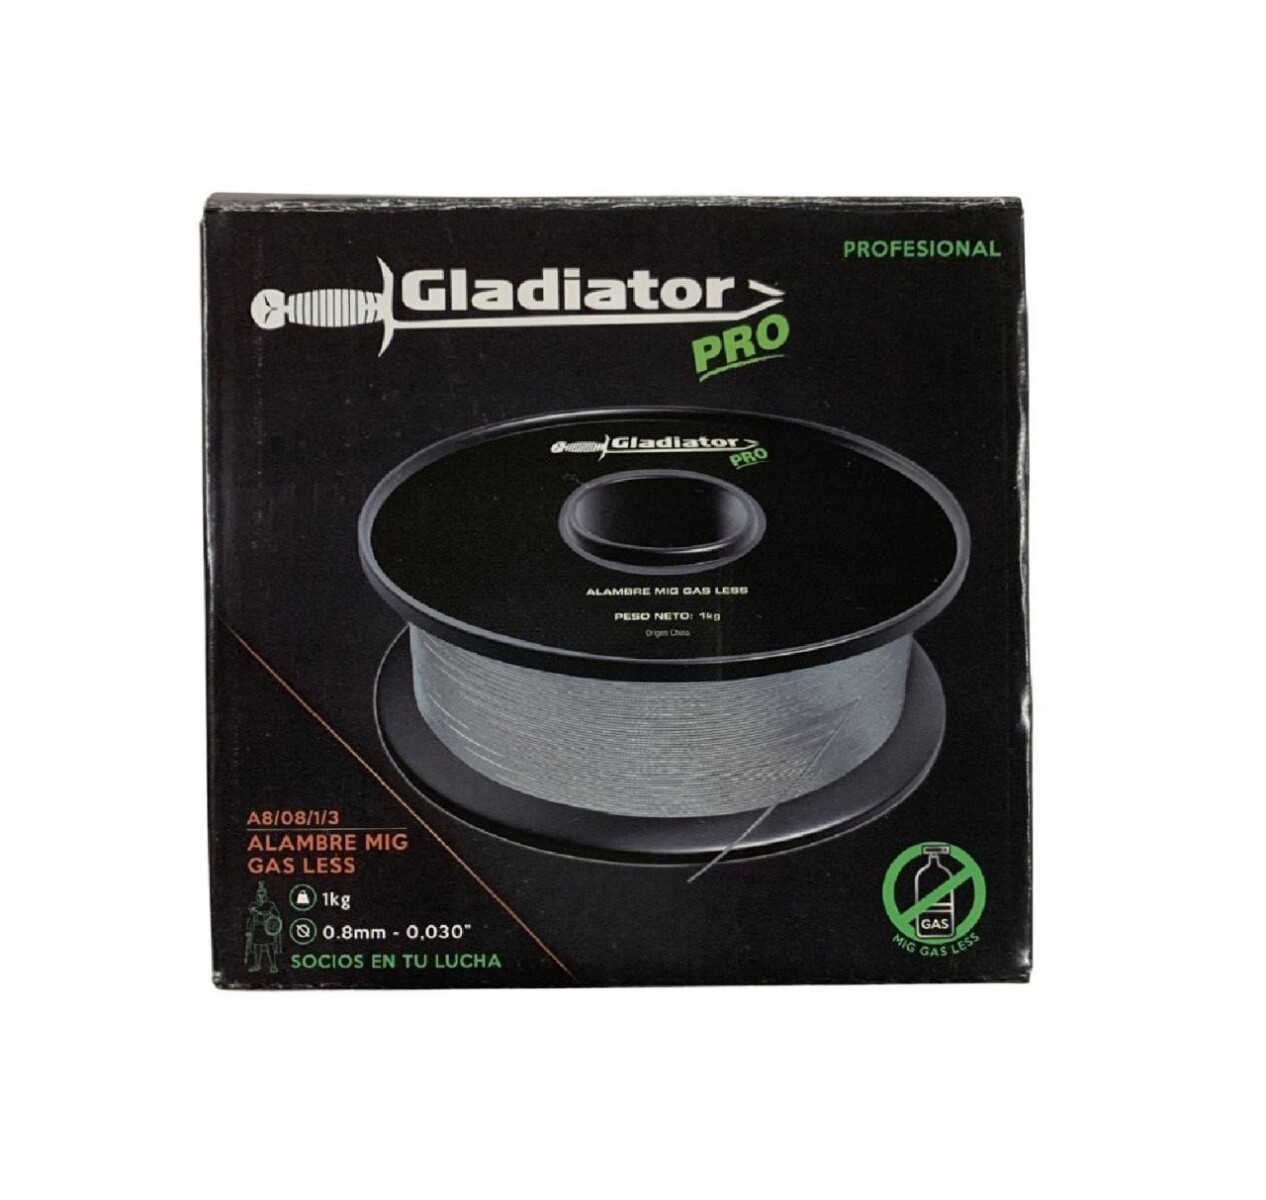 Alambre Gladiator Gas Lees 0.8mm 1kg A8/08/1/3.- 